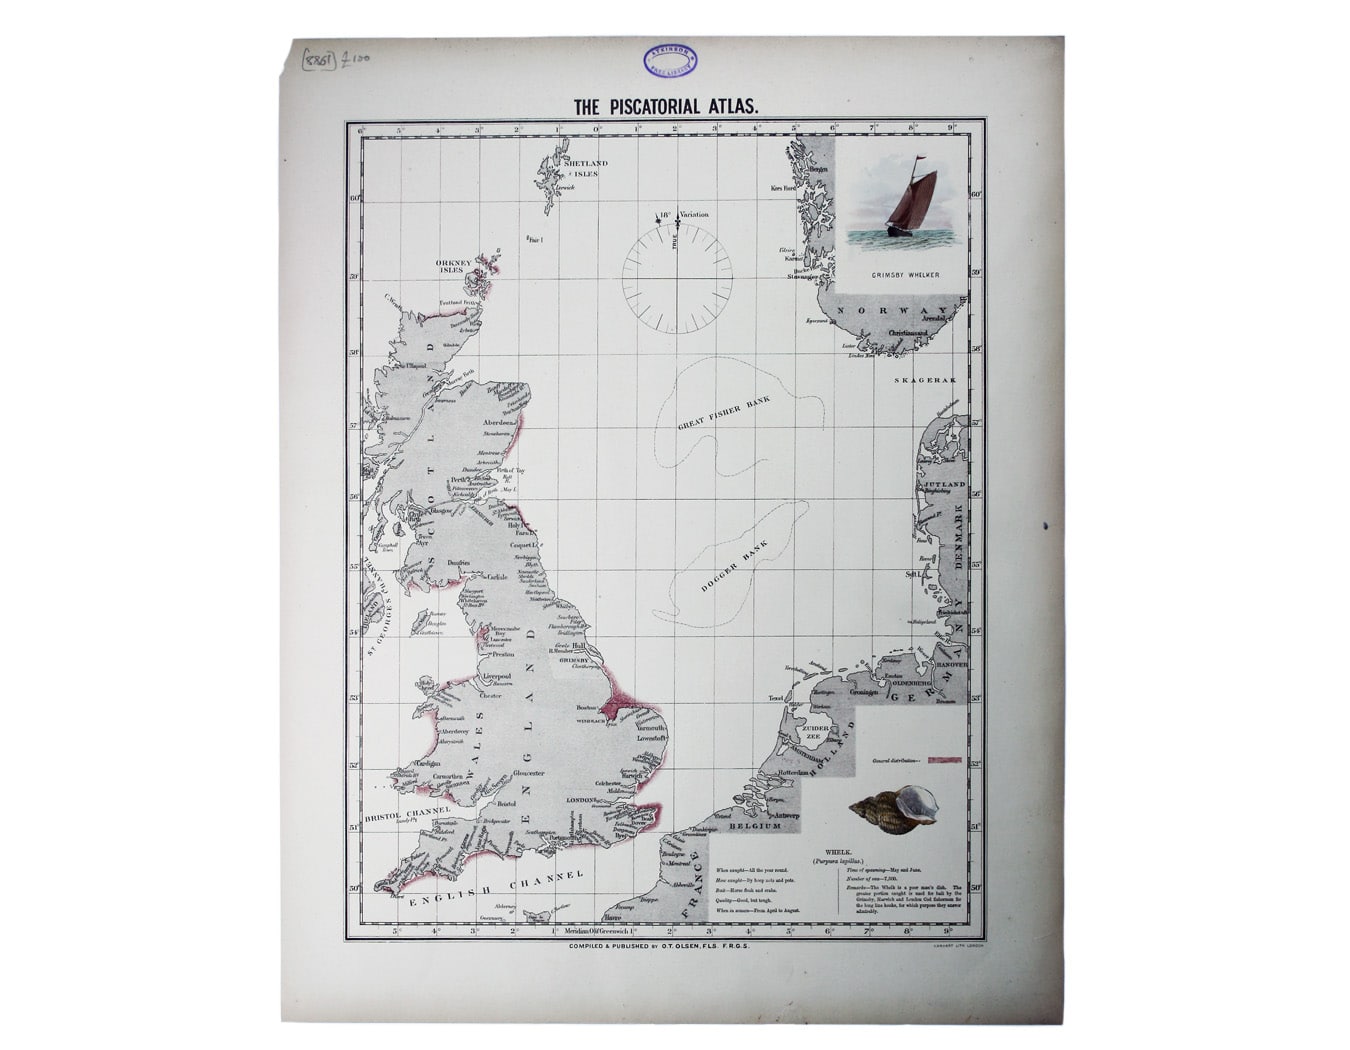 Olsen’s Chart of Whelk Stocks in British Waters